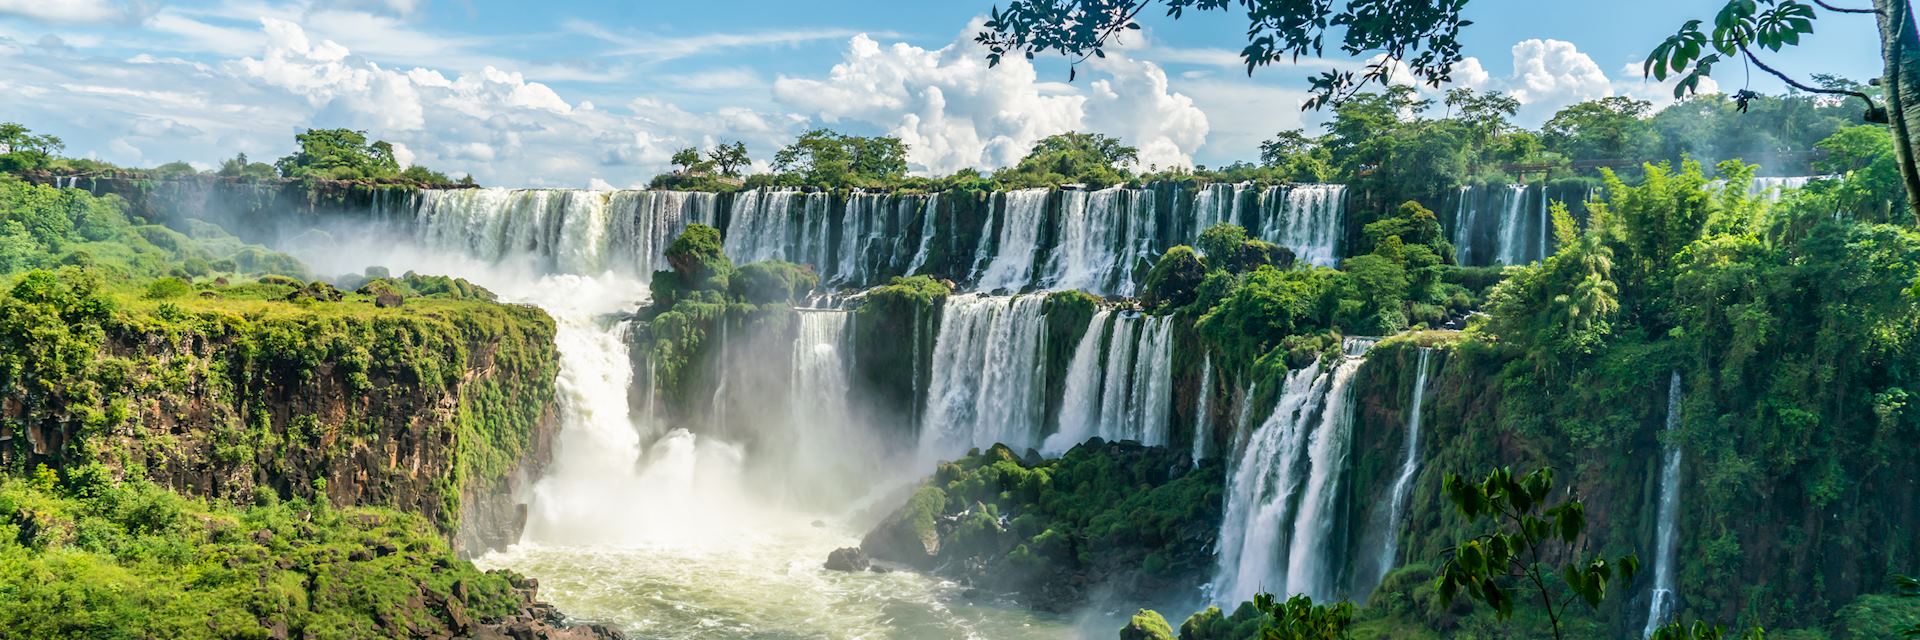 Iguazú Falls, Argentinian National Park